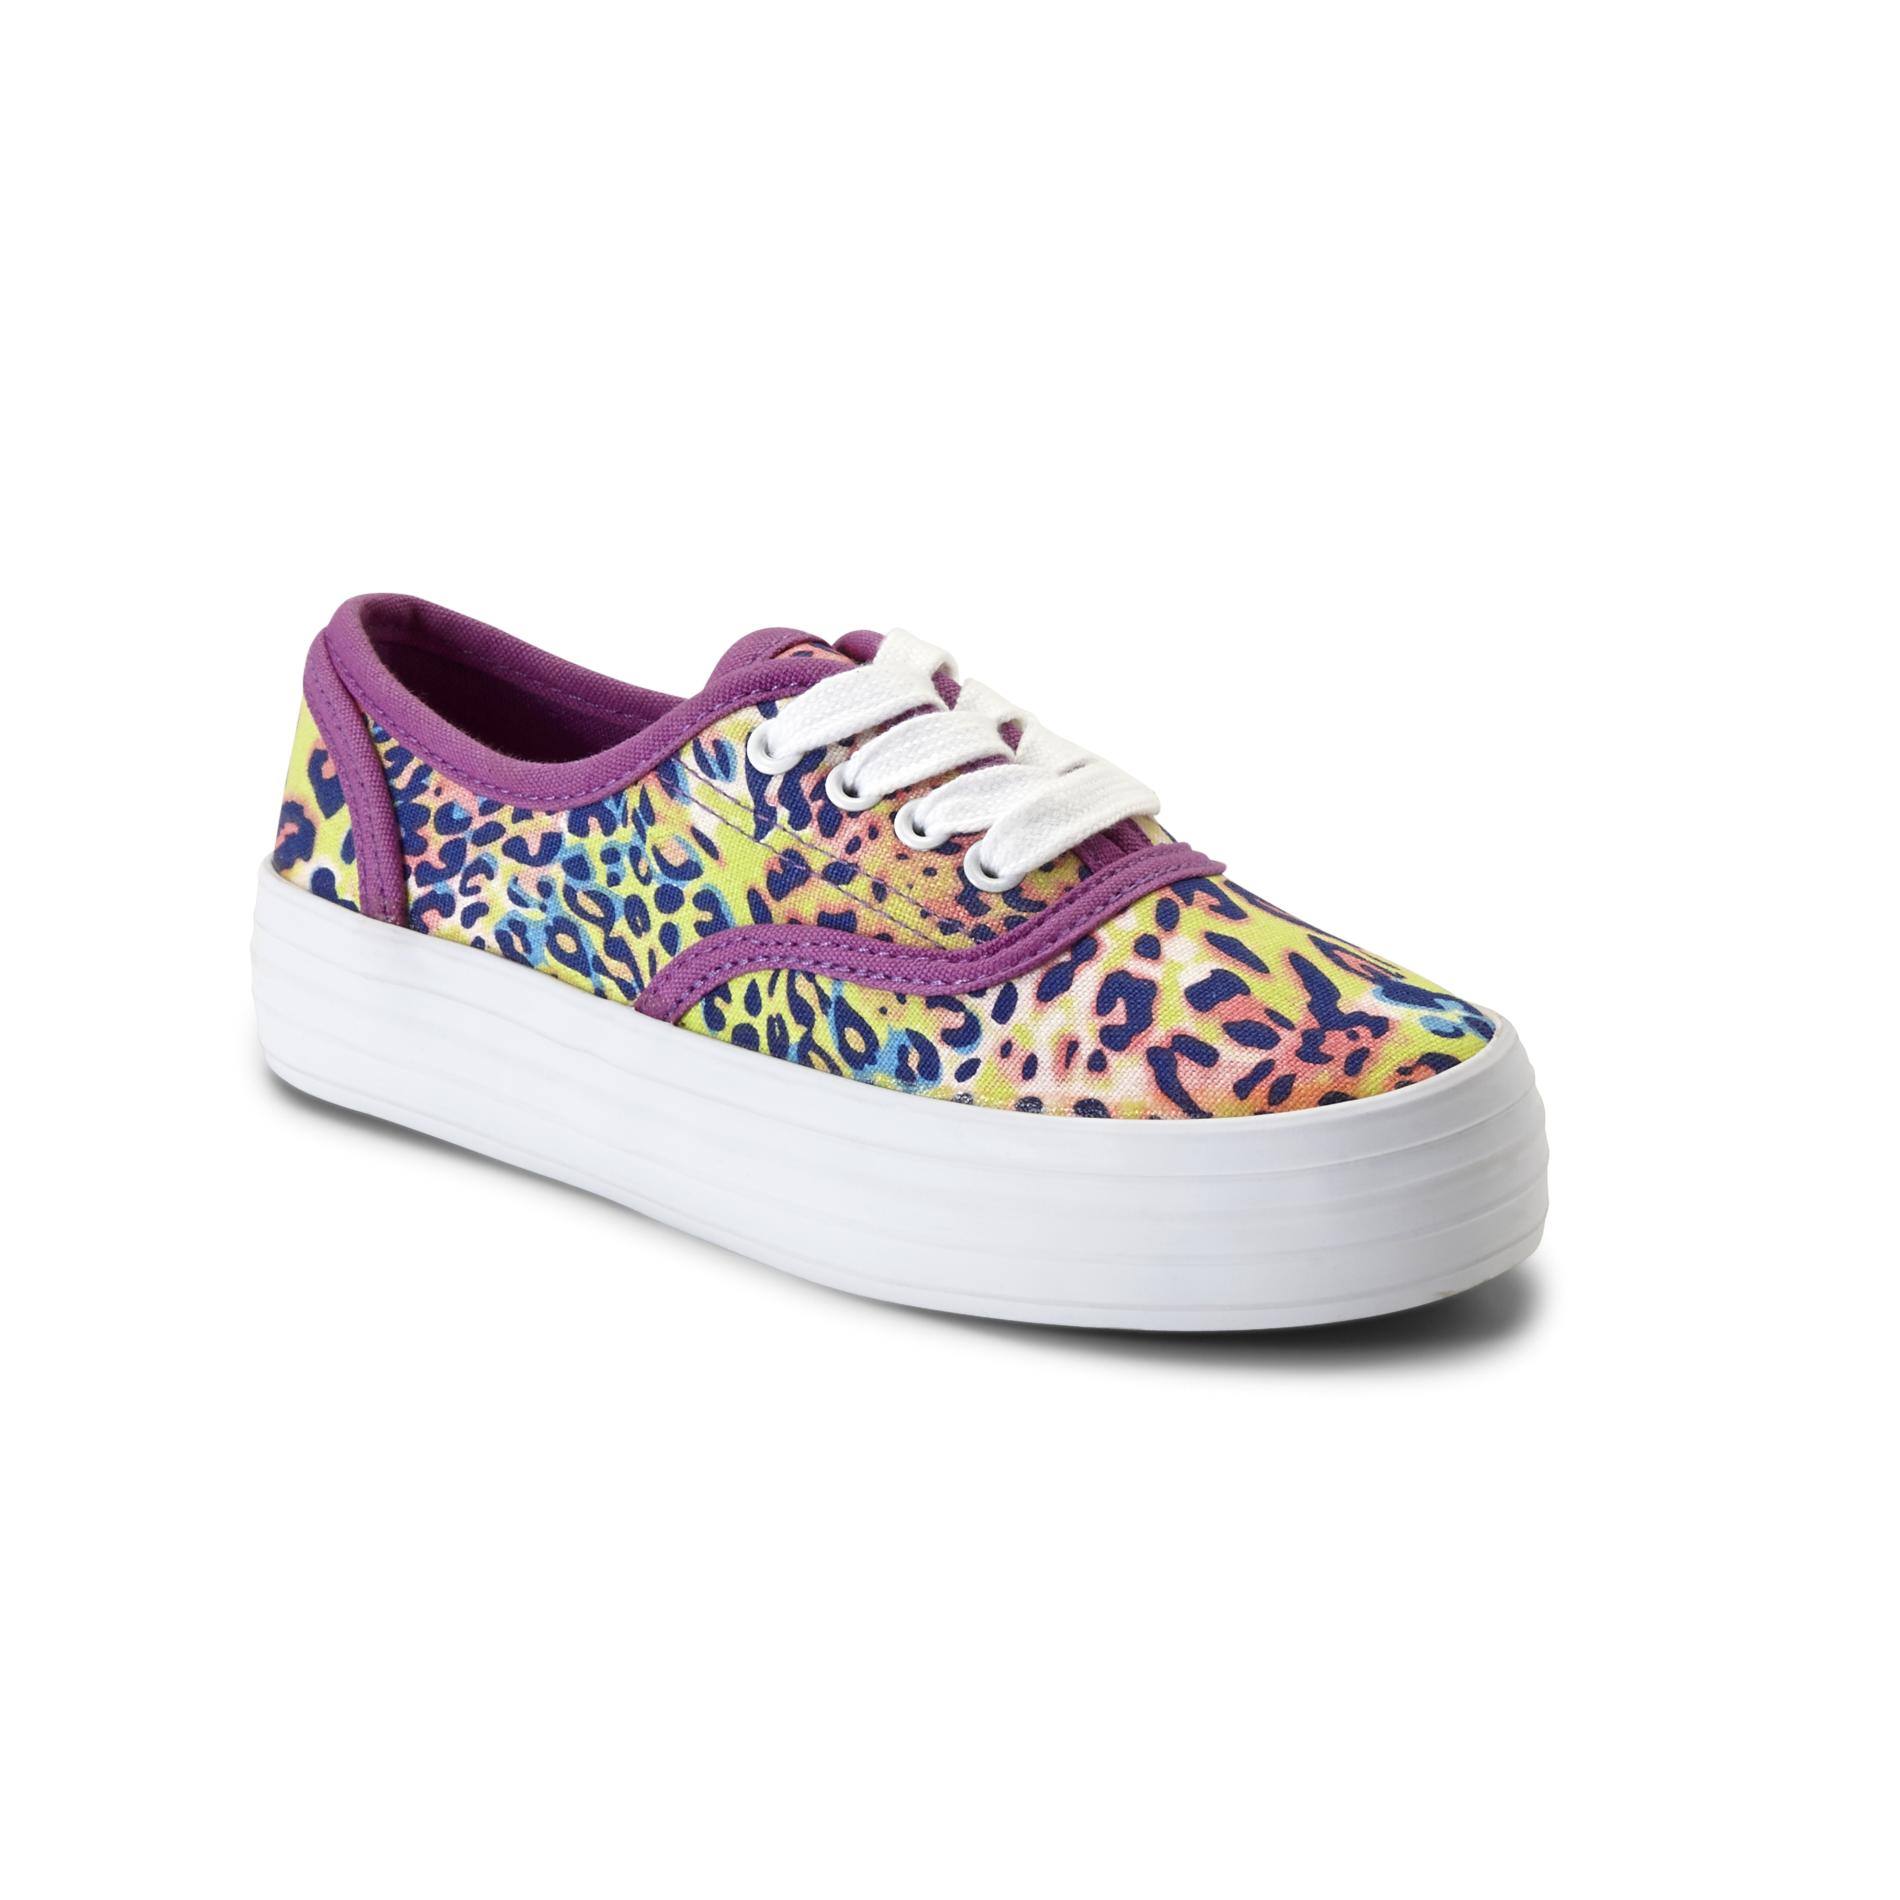 Bongo Girl's Cameo Multicolor Canvas Sneaker - Leopard Print